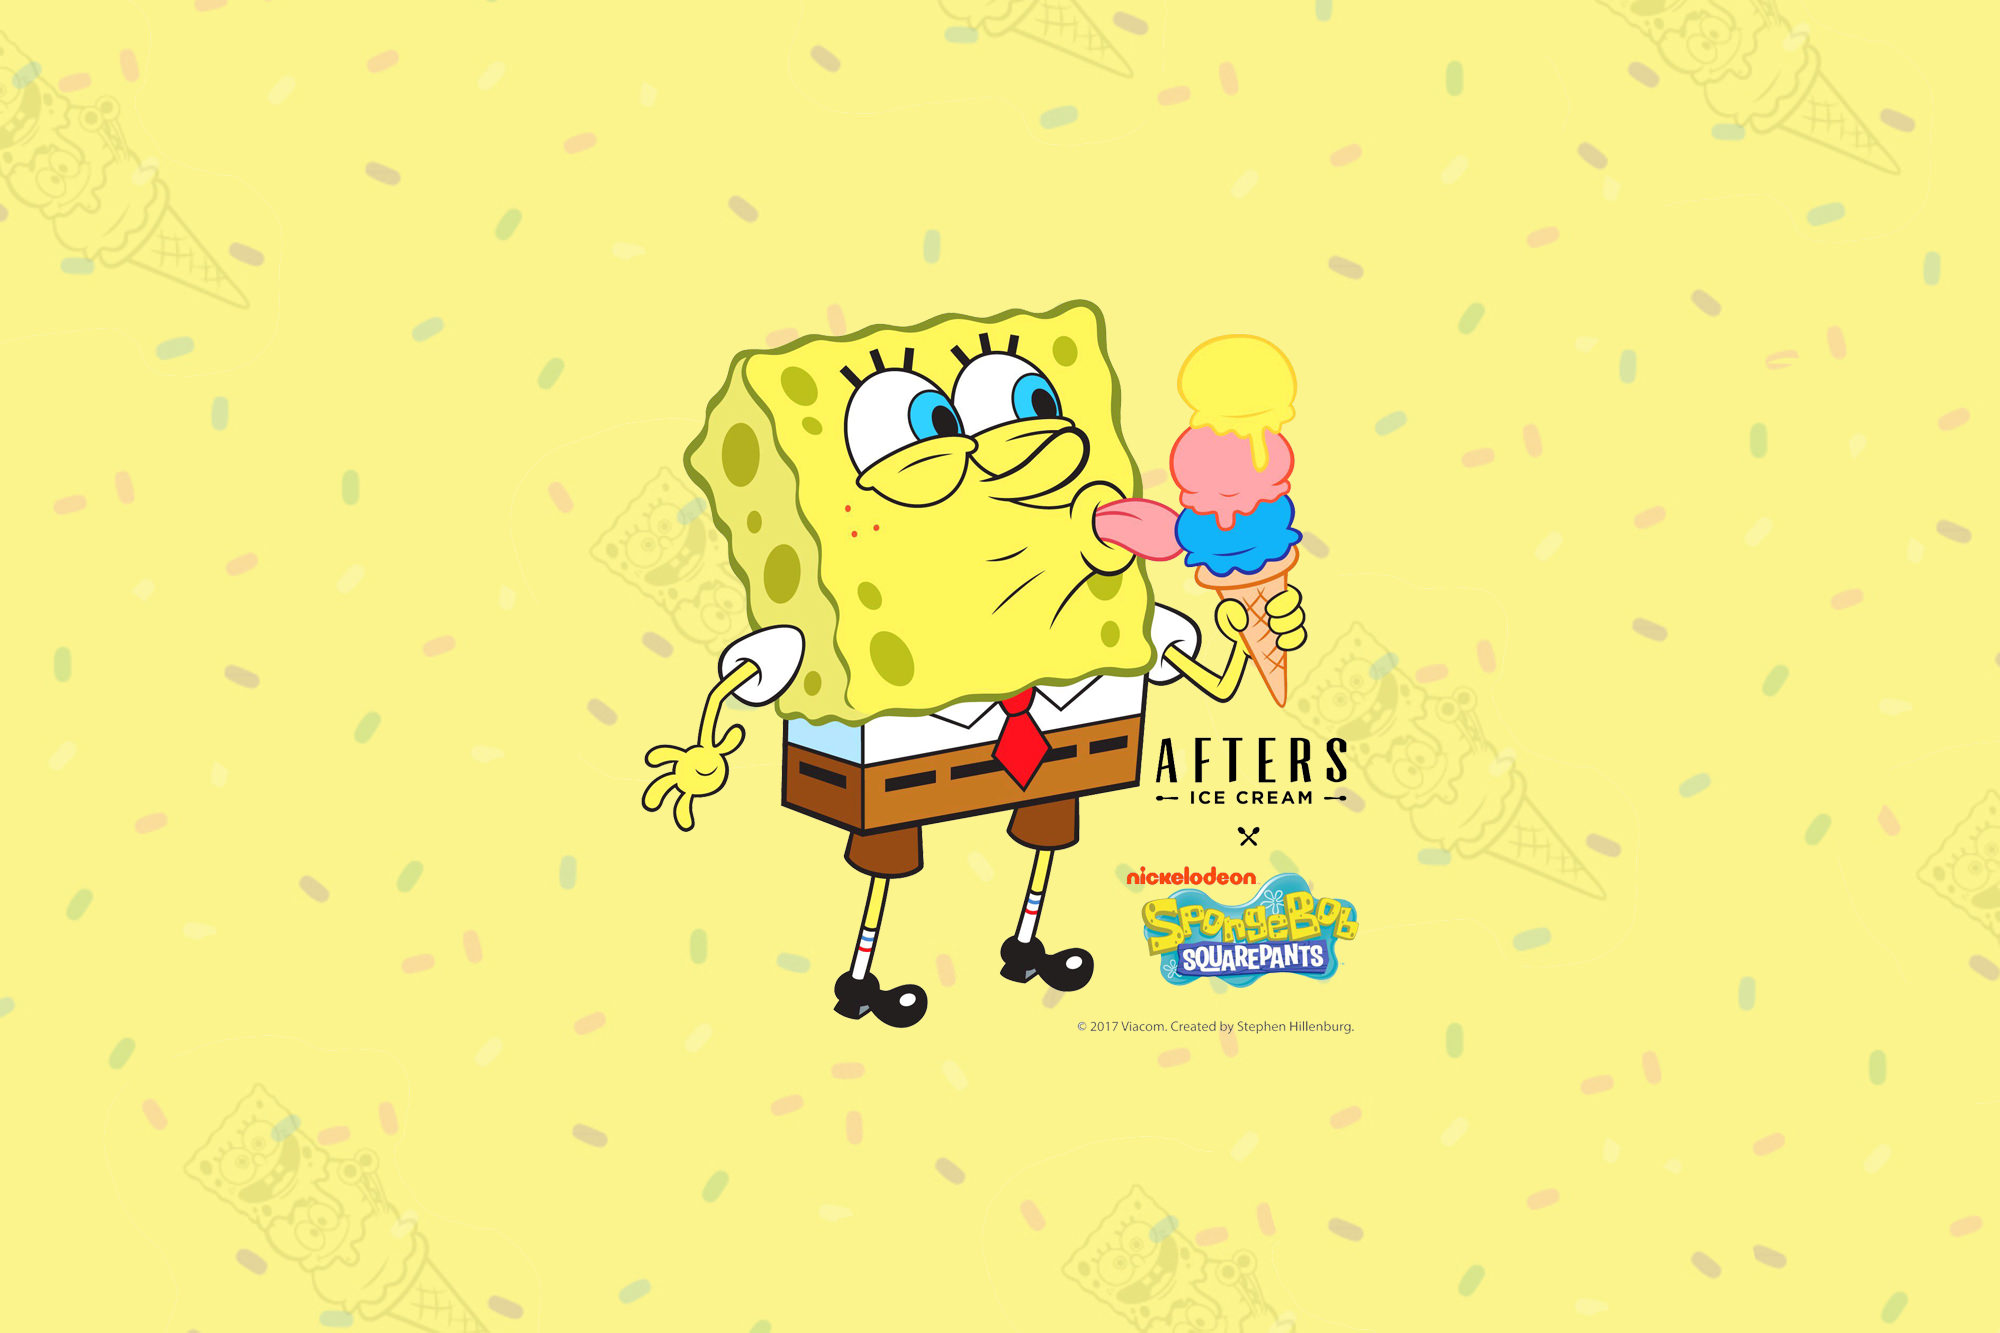 Sponge Bob at Afters Ice Cream